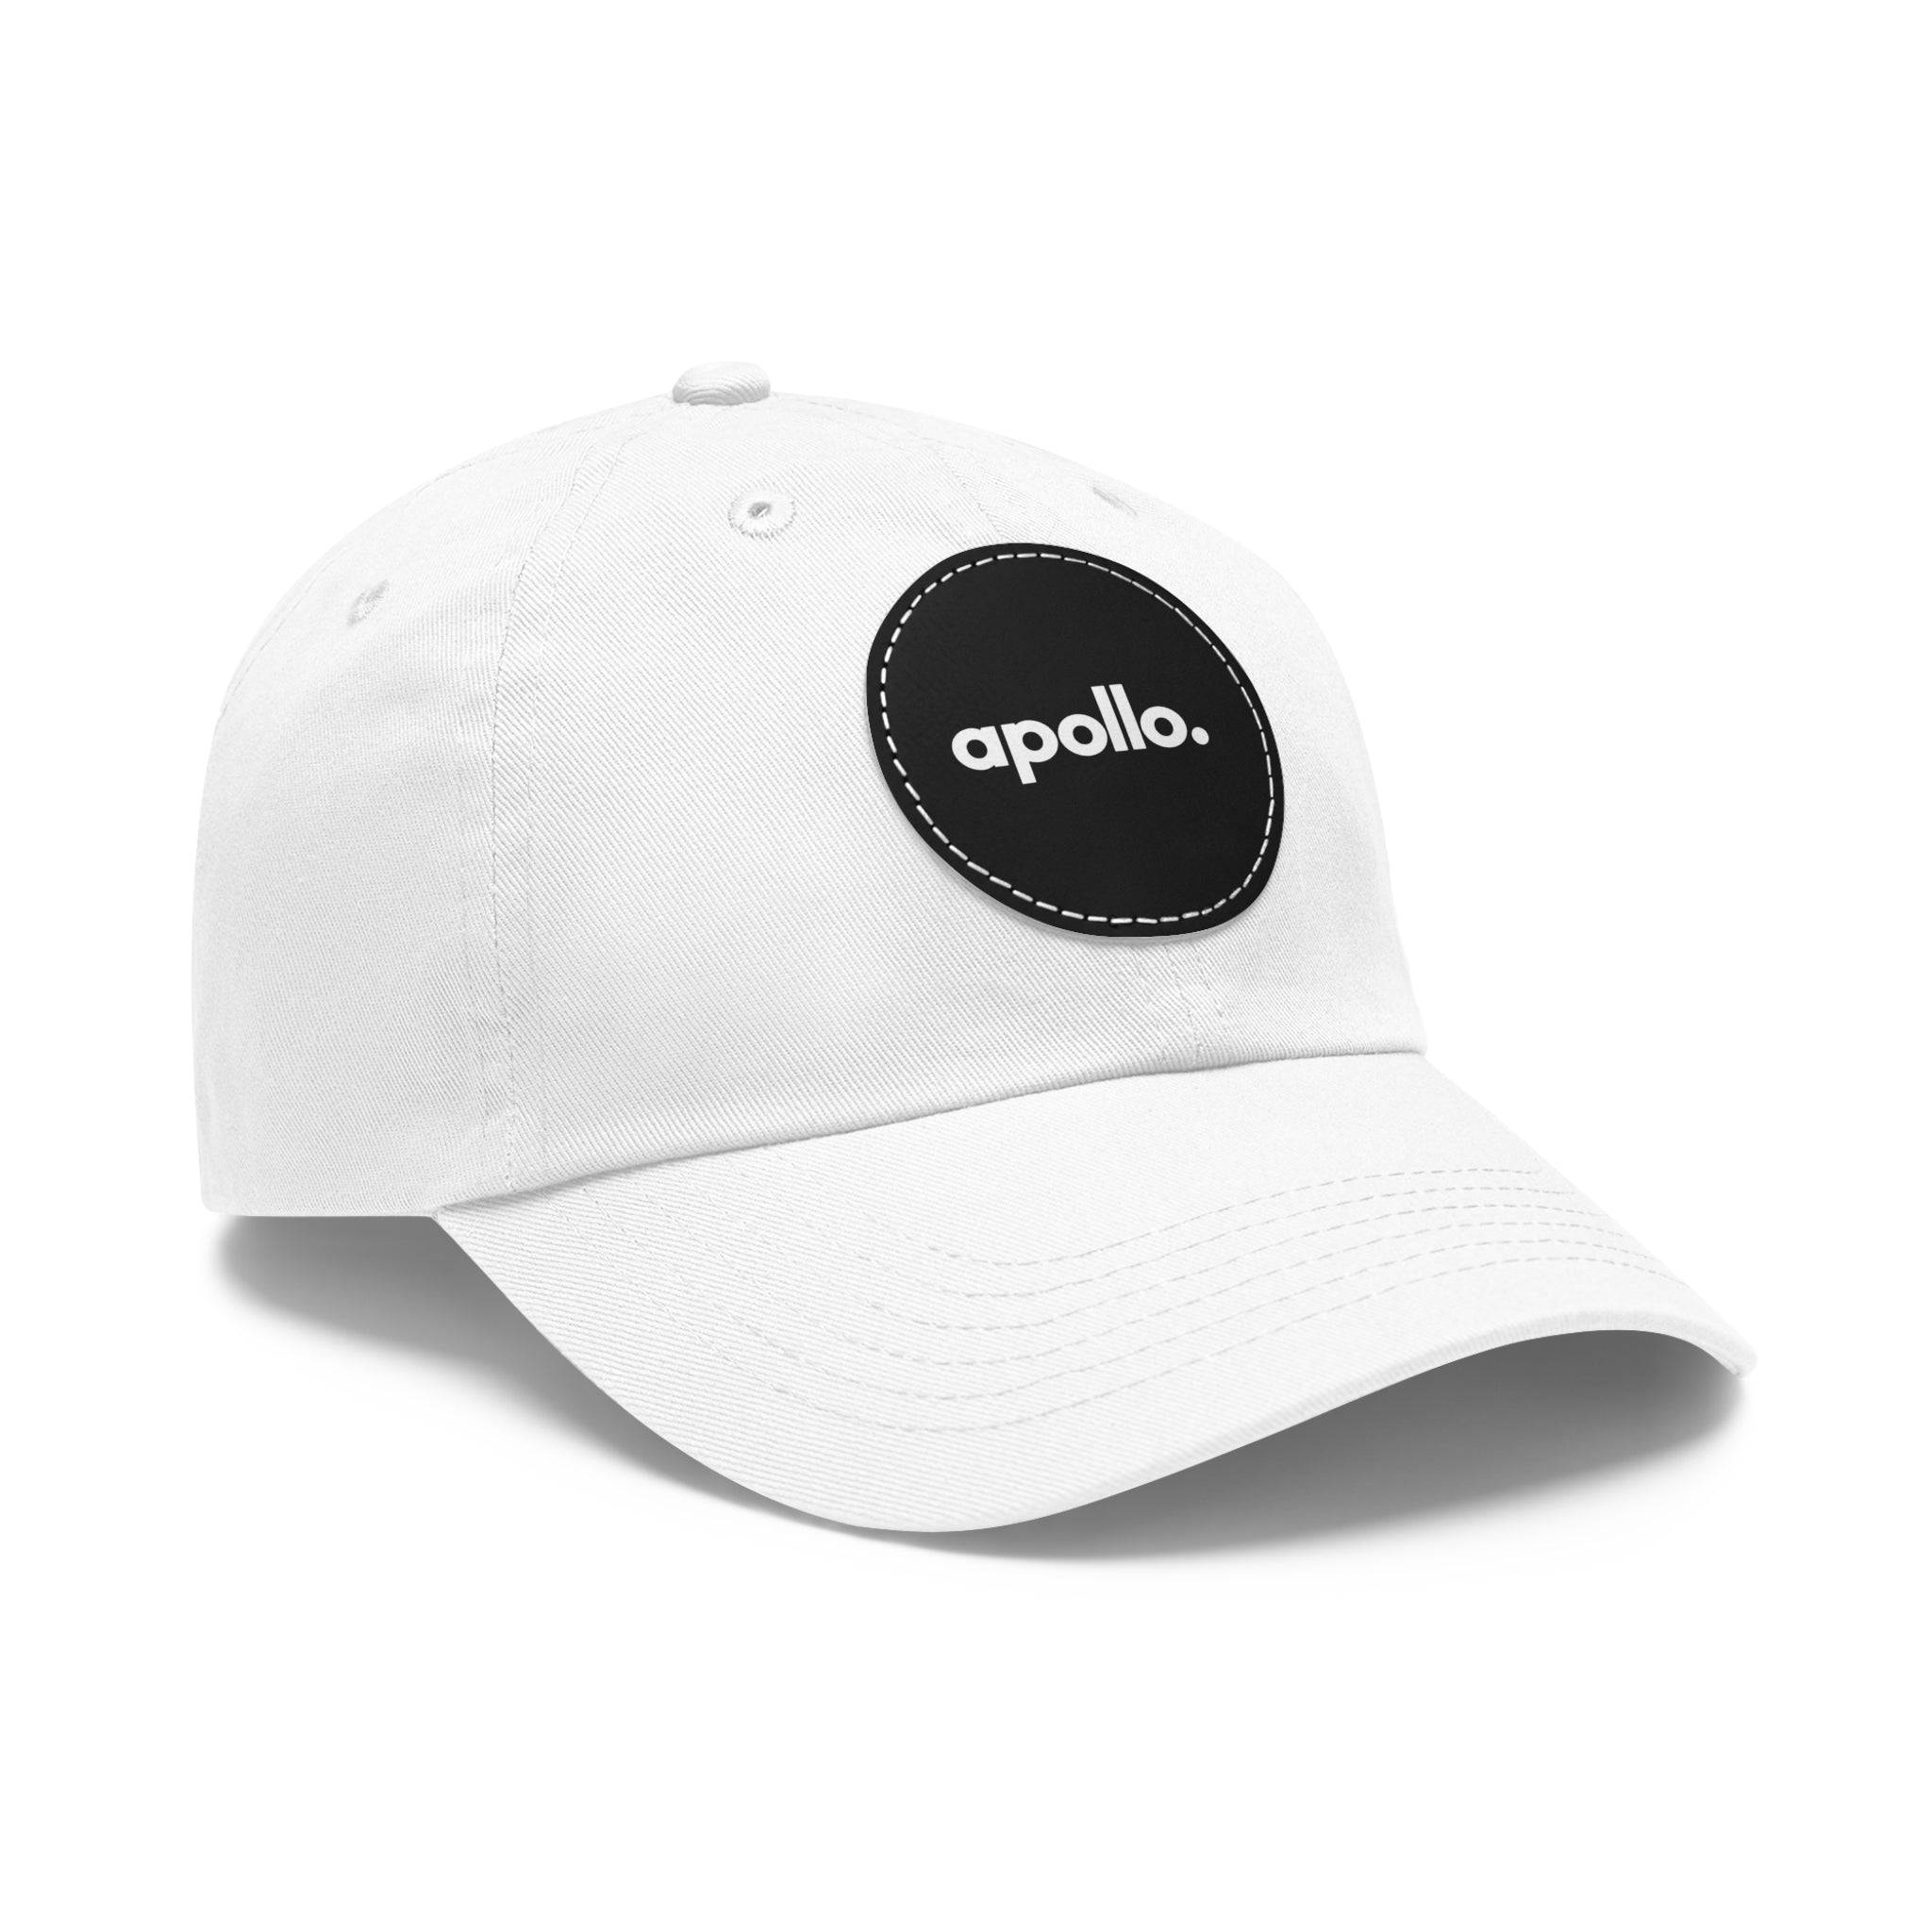 Apollo Dad Hat with Leather Patch (Round) - Apollo Moda